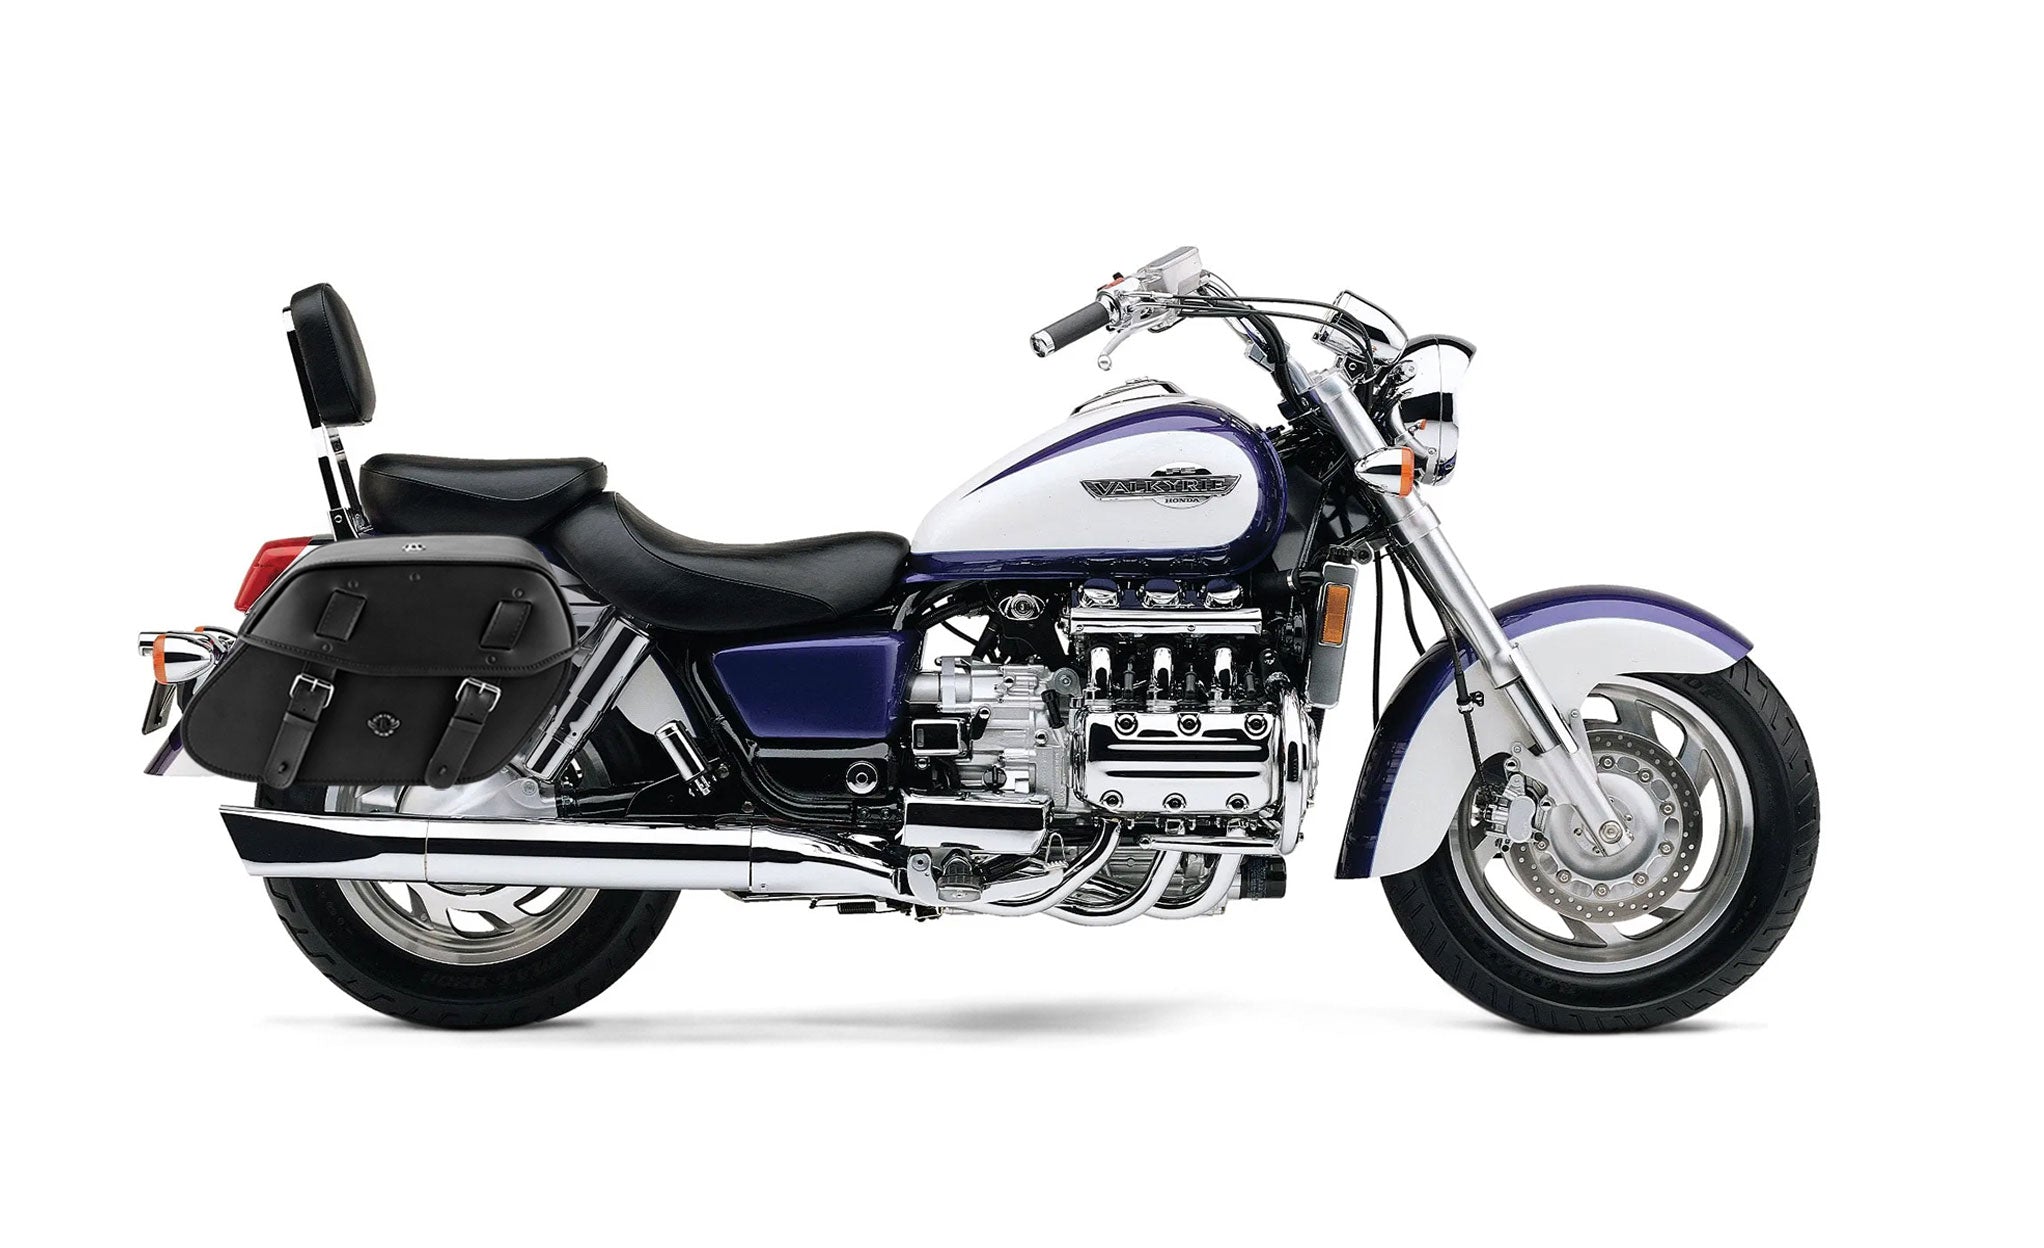 Viking Odin Large Honda Valkyrie 1500 Interstate Leather Motorcycle Saddlebags on Bike Photo @expand